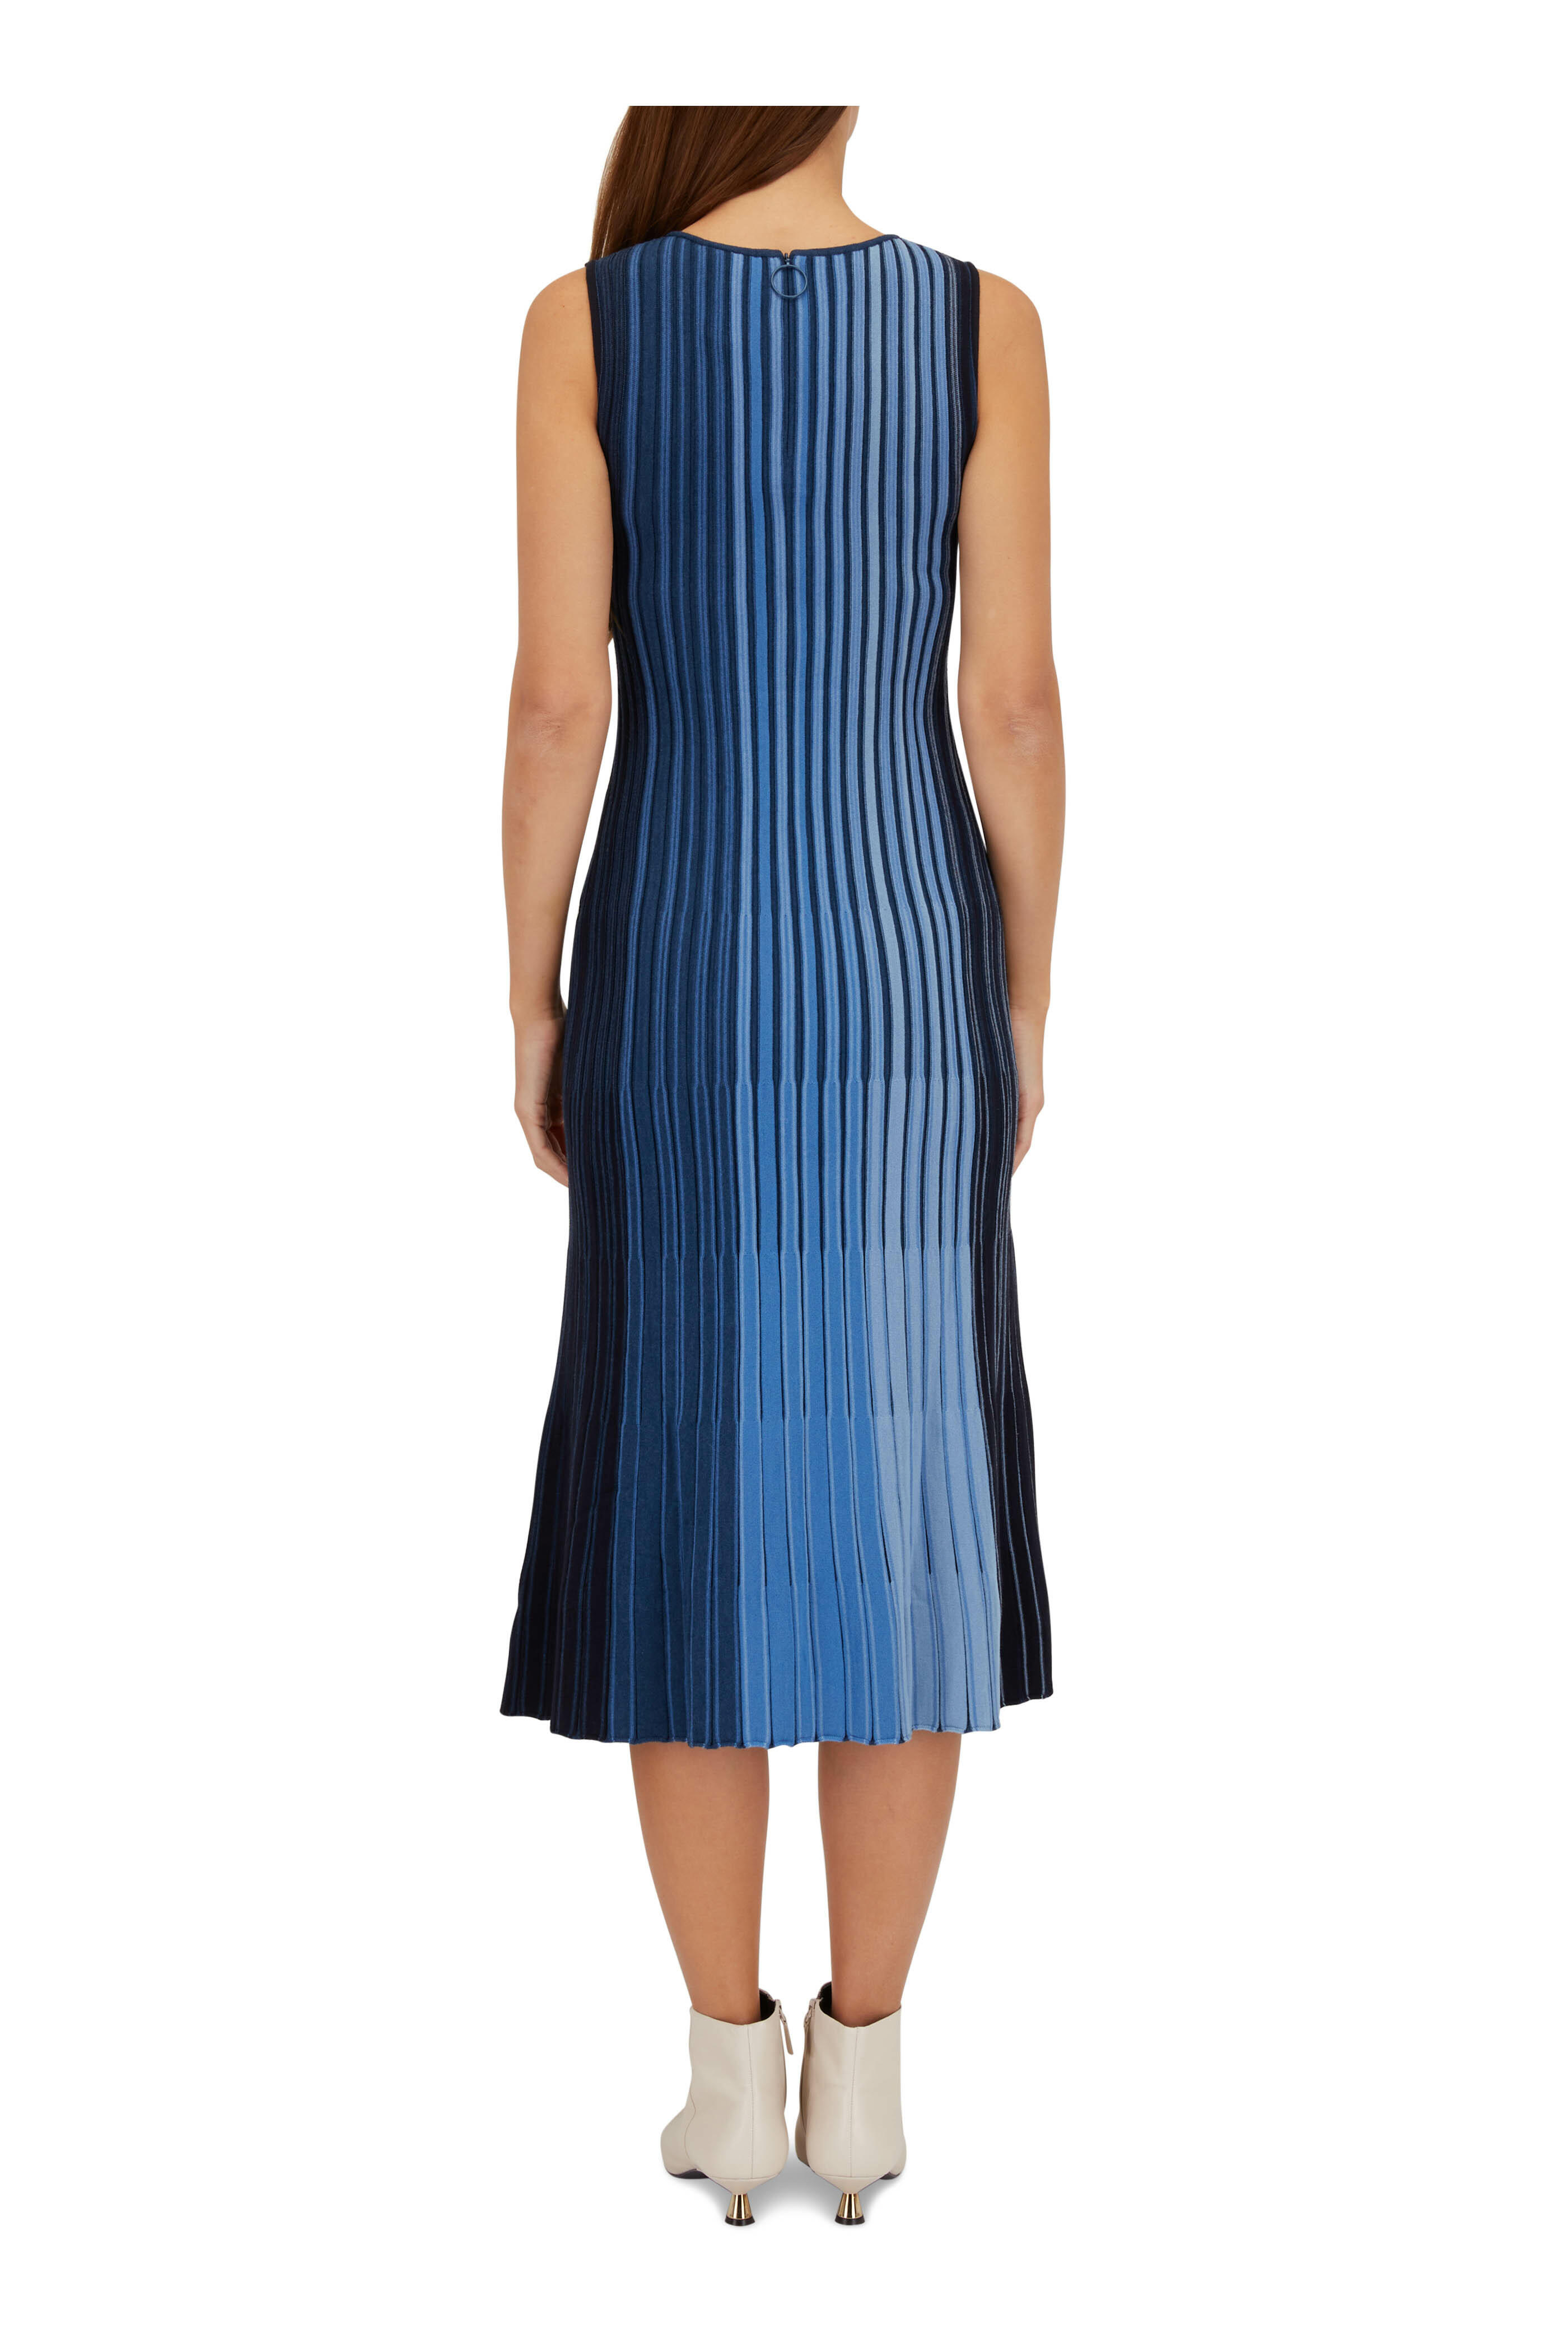 Akris Punto - Blue Striped Wool Knit Dress | Mitchell Stores